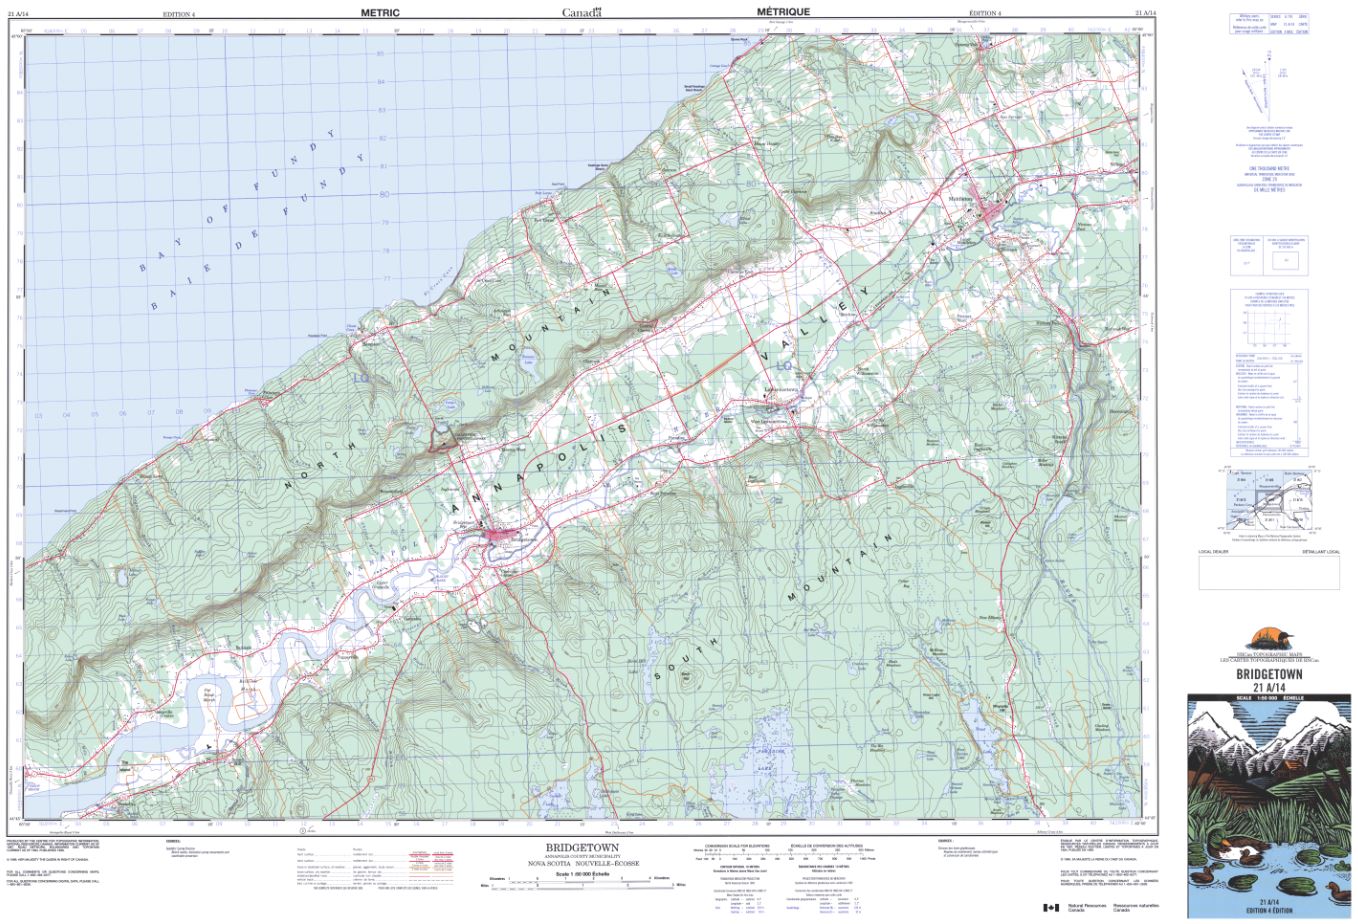 21A/14 Bridgetown Topographic Map Nova Scotia Tyvek